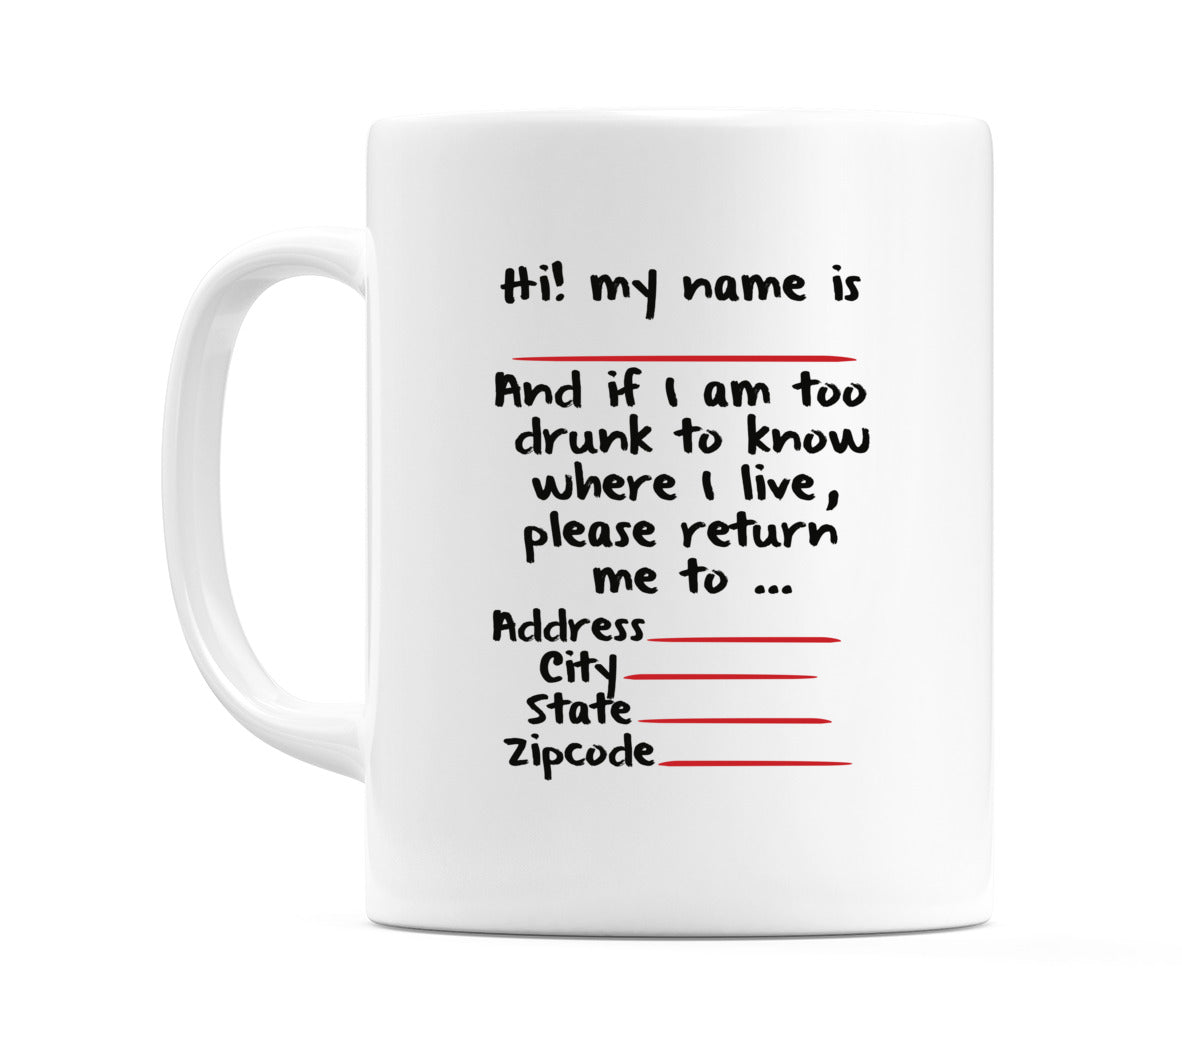 Hi! my name is And if I am too... Mug